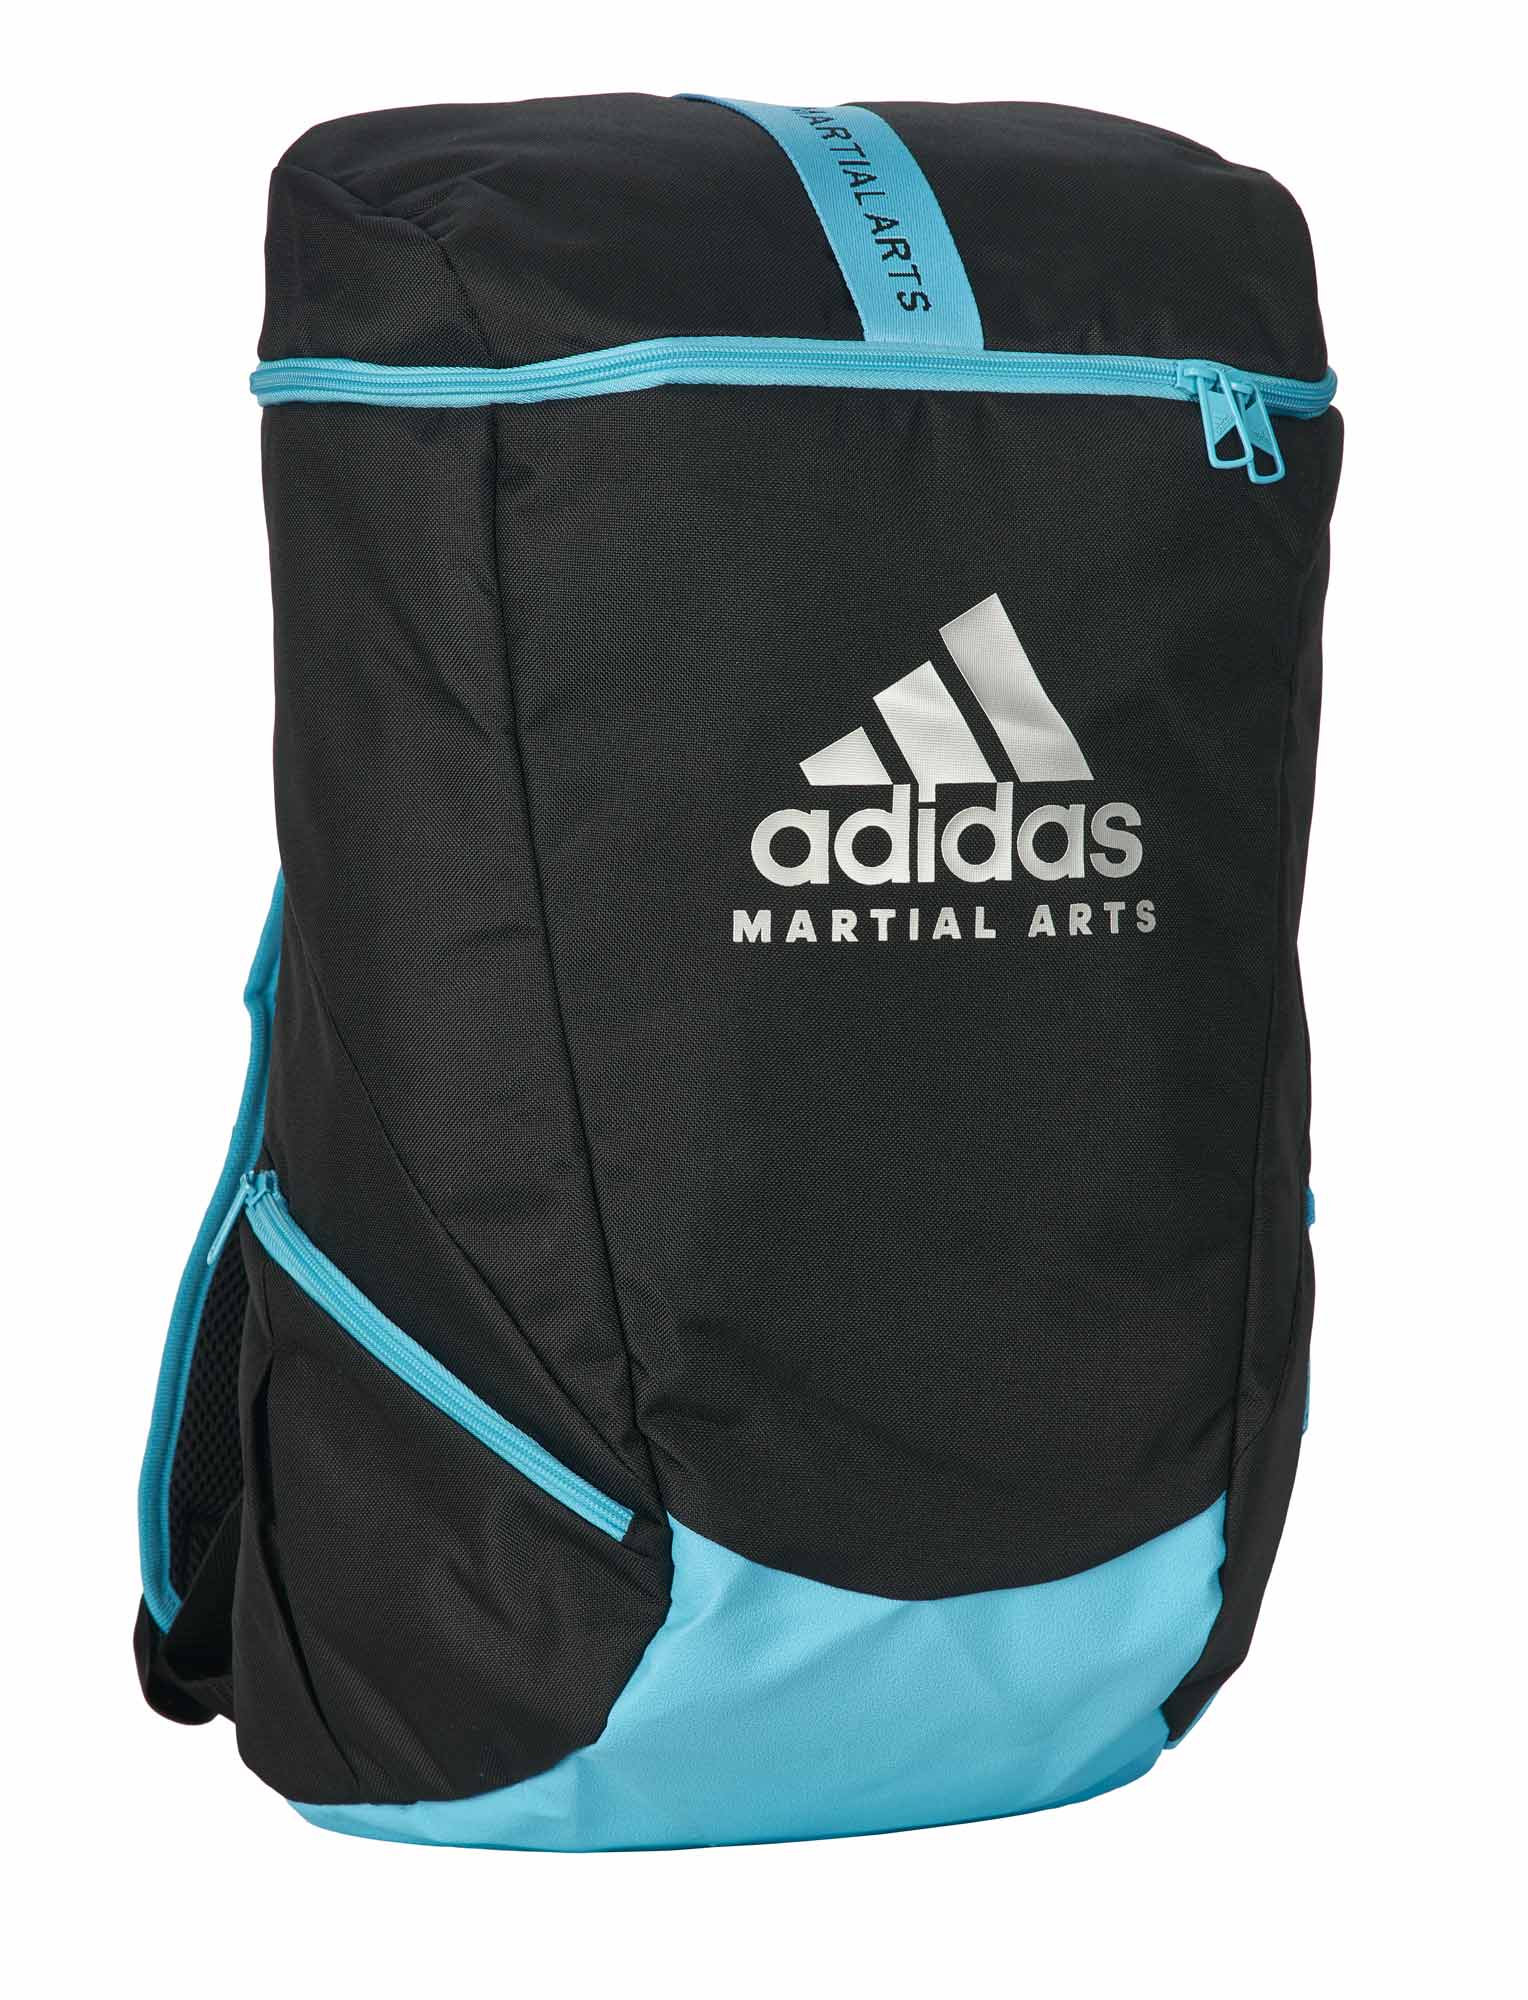 adidas backpack martial arts adiACC090MA, black/cyan